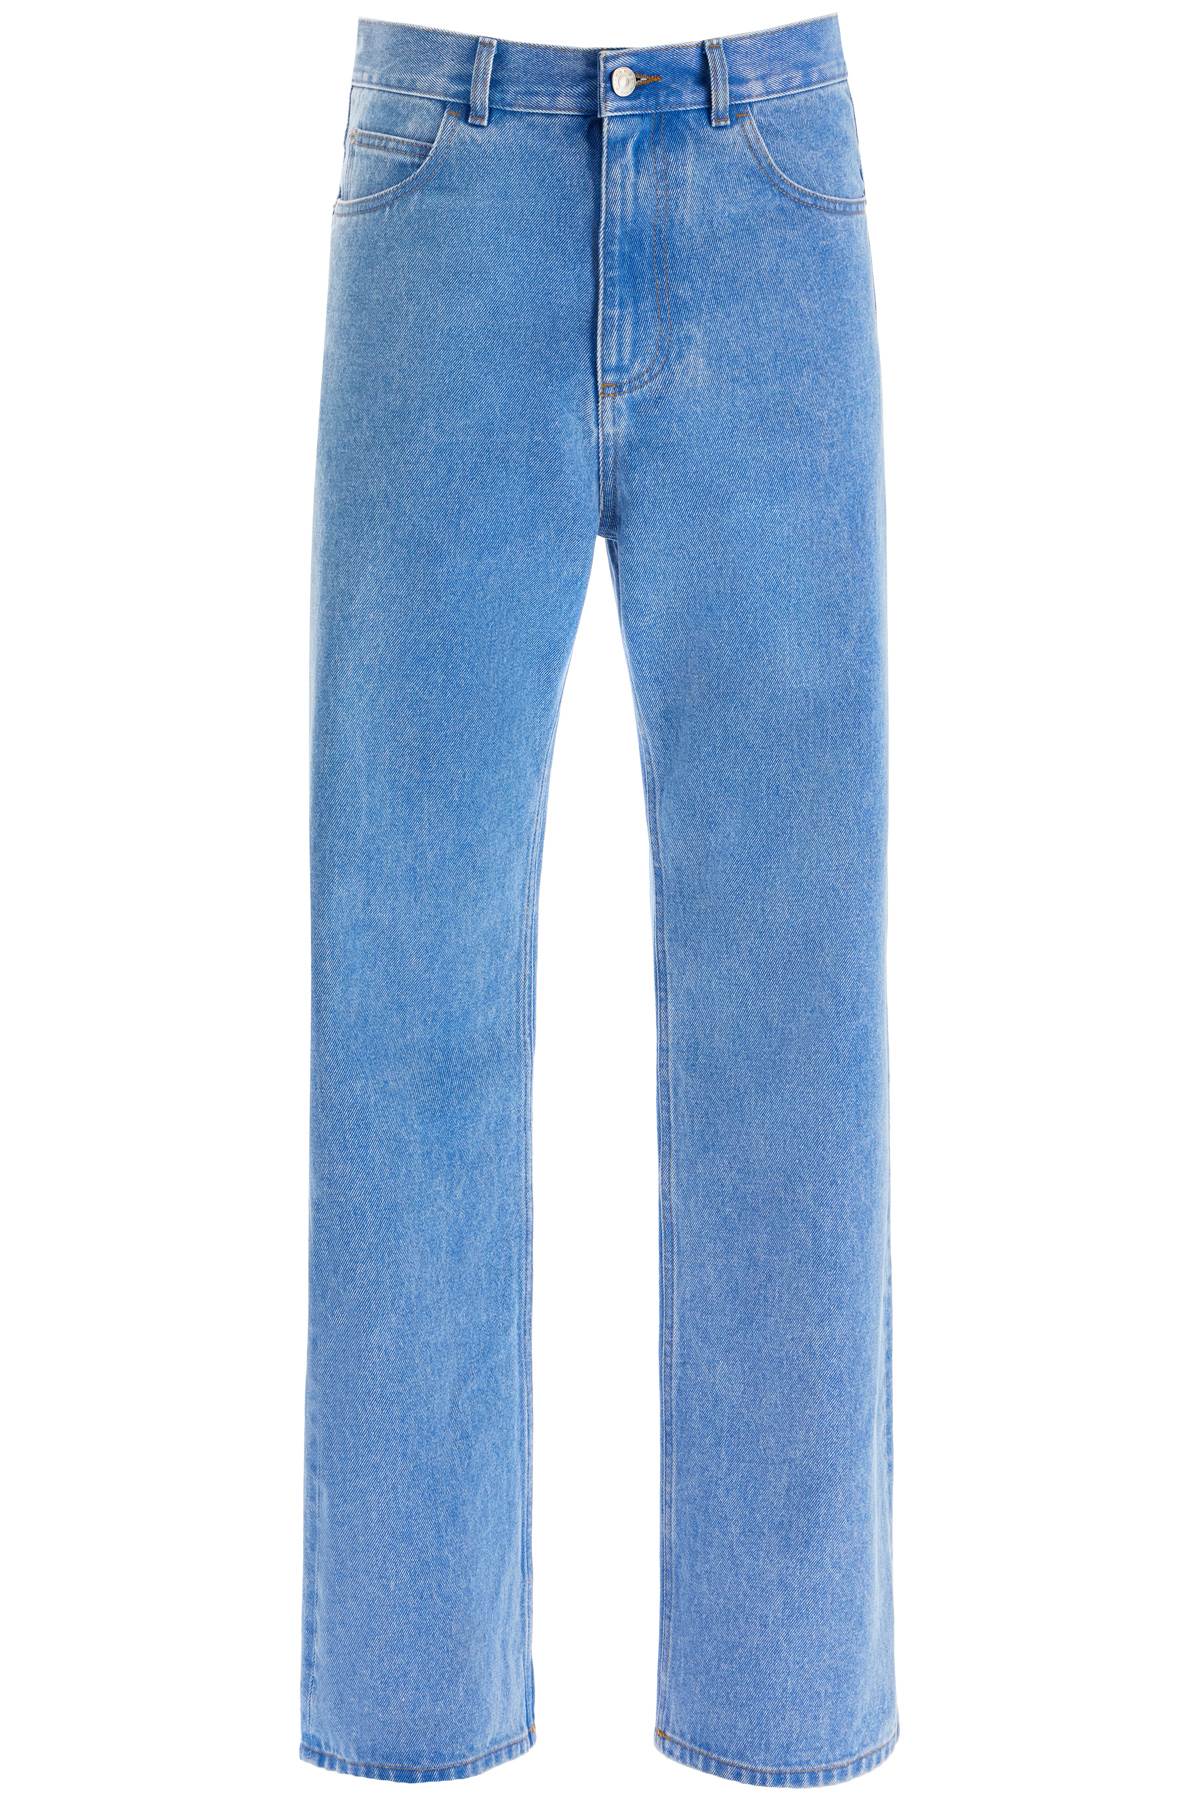 Marni MARNI straight leg organic denim jeans